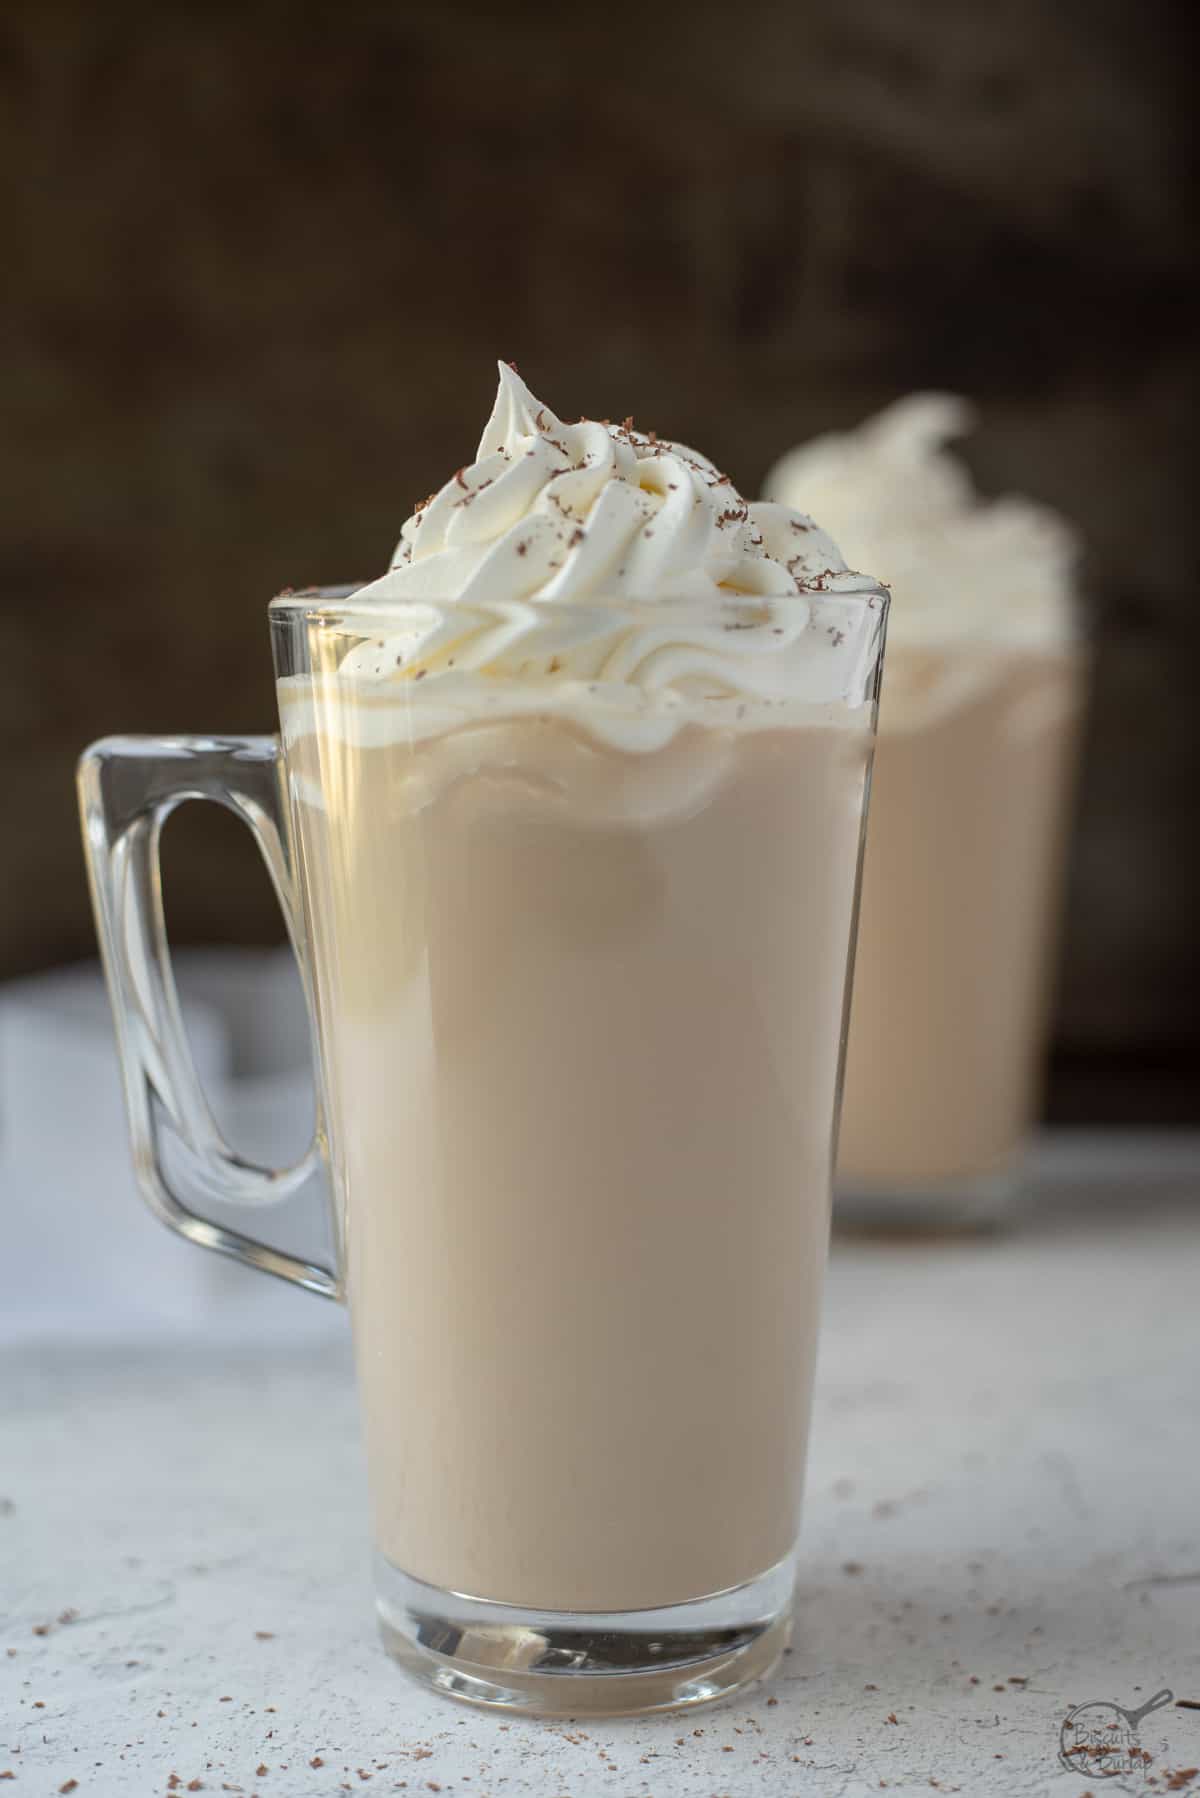 White Chocolate Mocha (Starbucks Copycat)